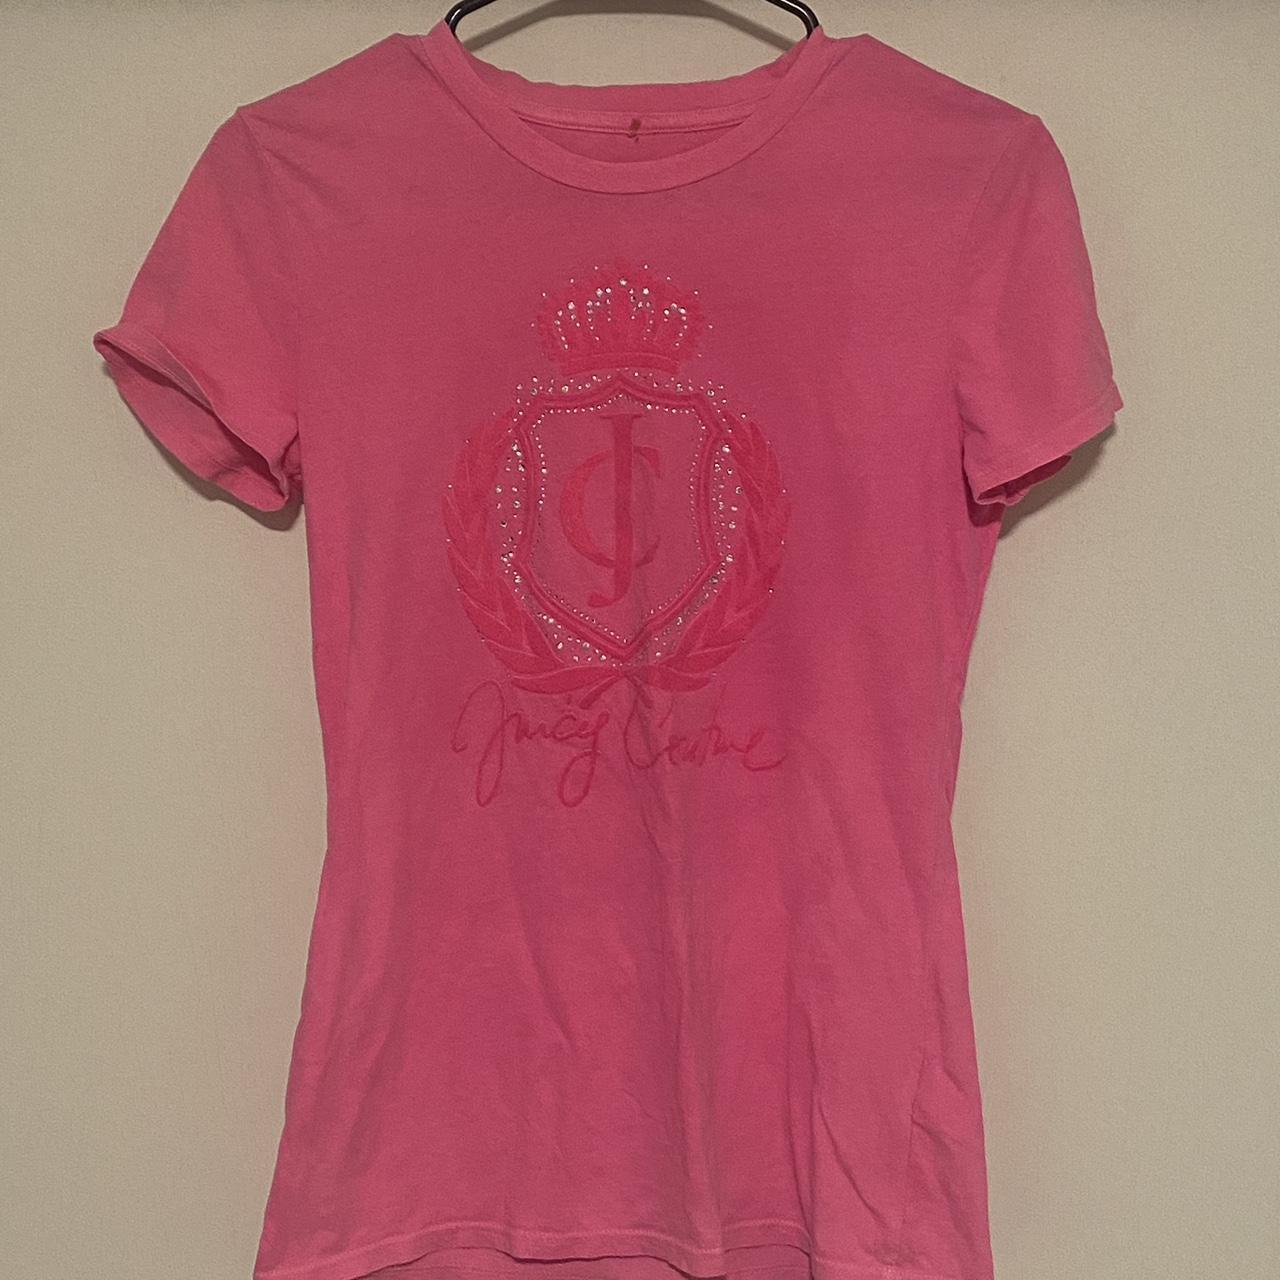 Juicy Couture Women's Pink T-shirt | Depop